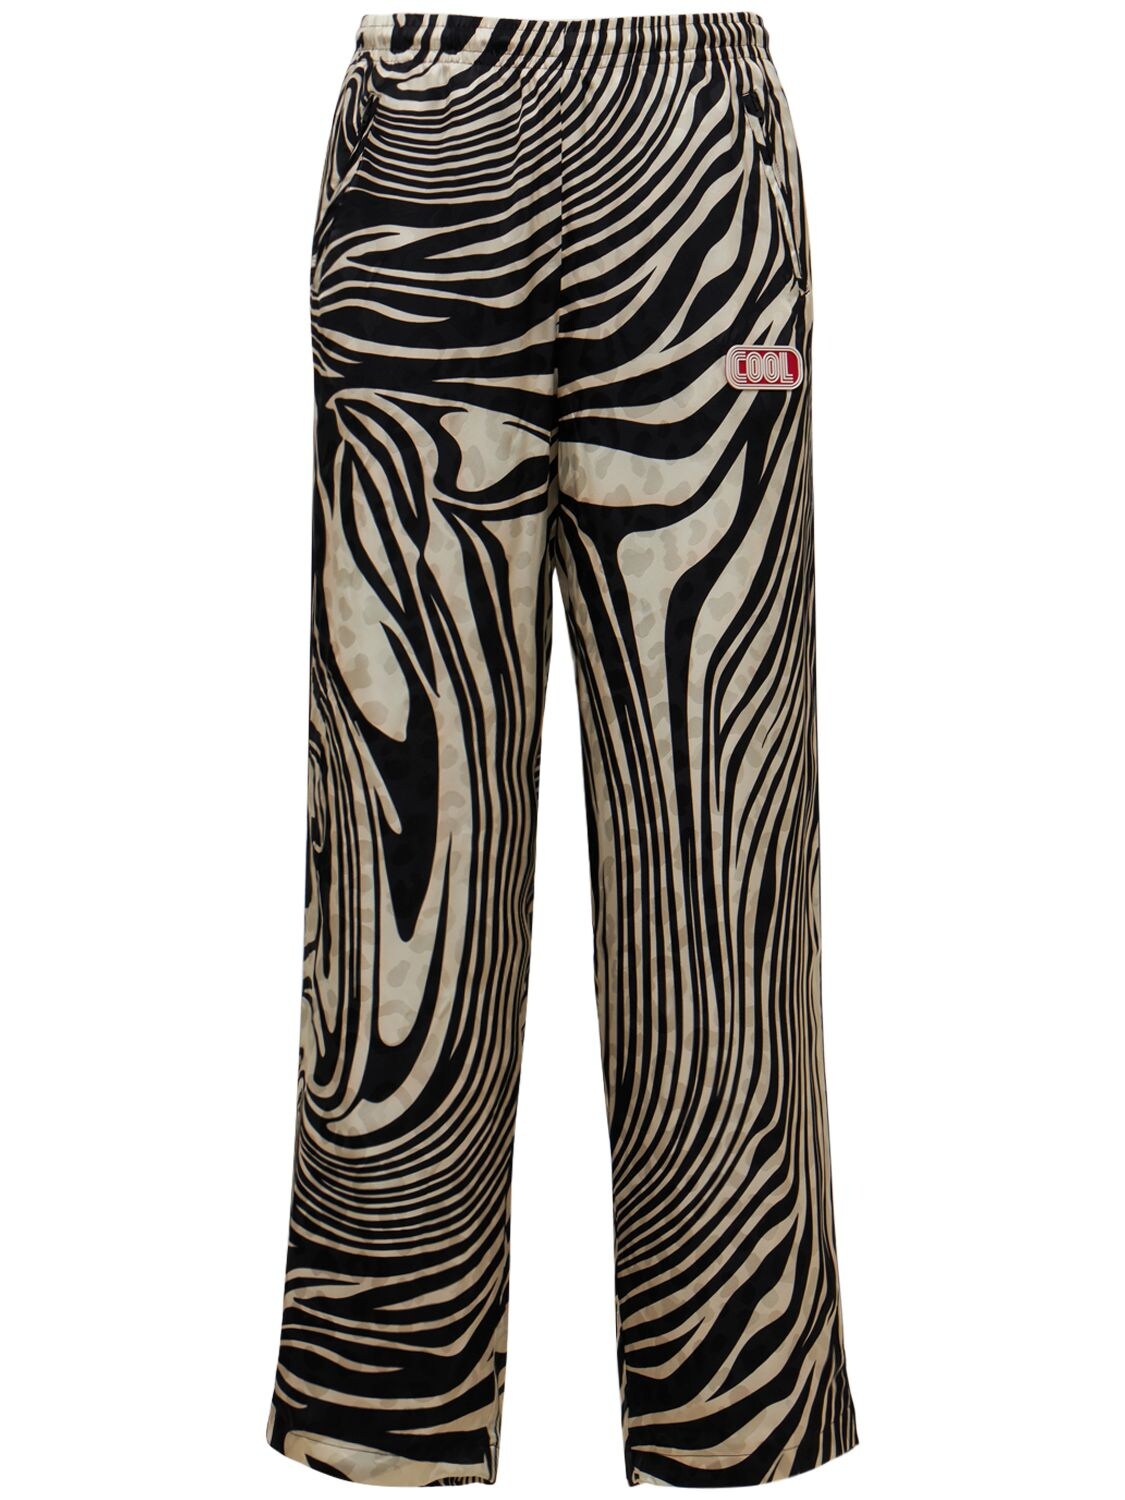 COOL TM Zebra Viscose & Cotton Pants